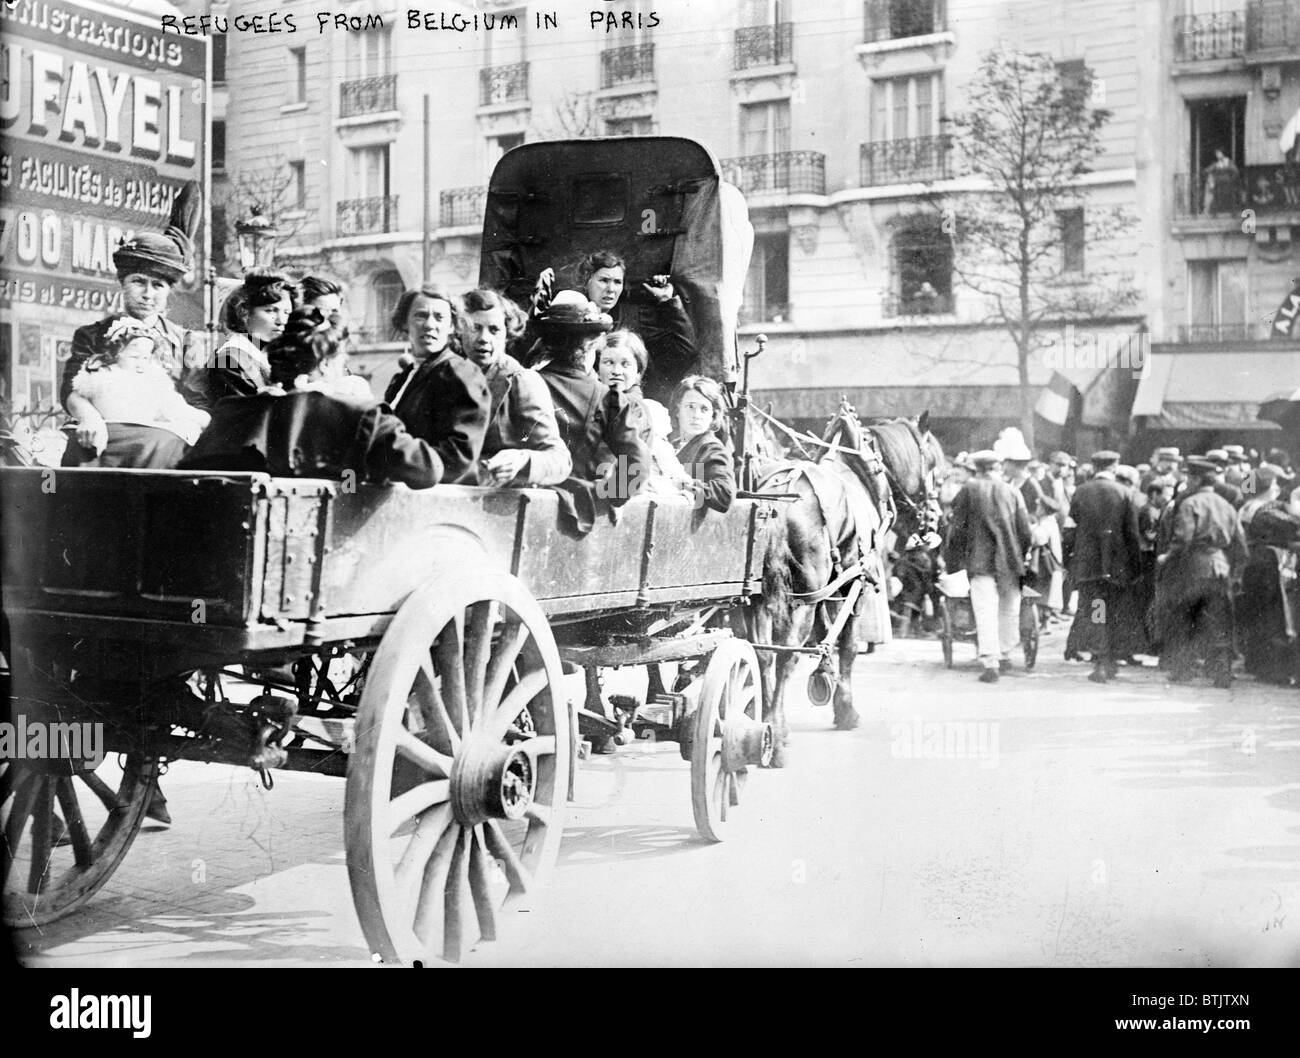 WORLD WAR I, Refugees from Belgium in Paris, photograph circa 1914 ...